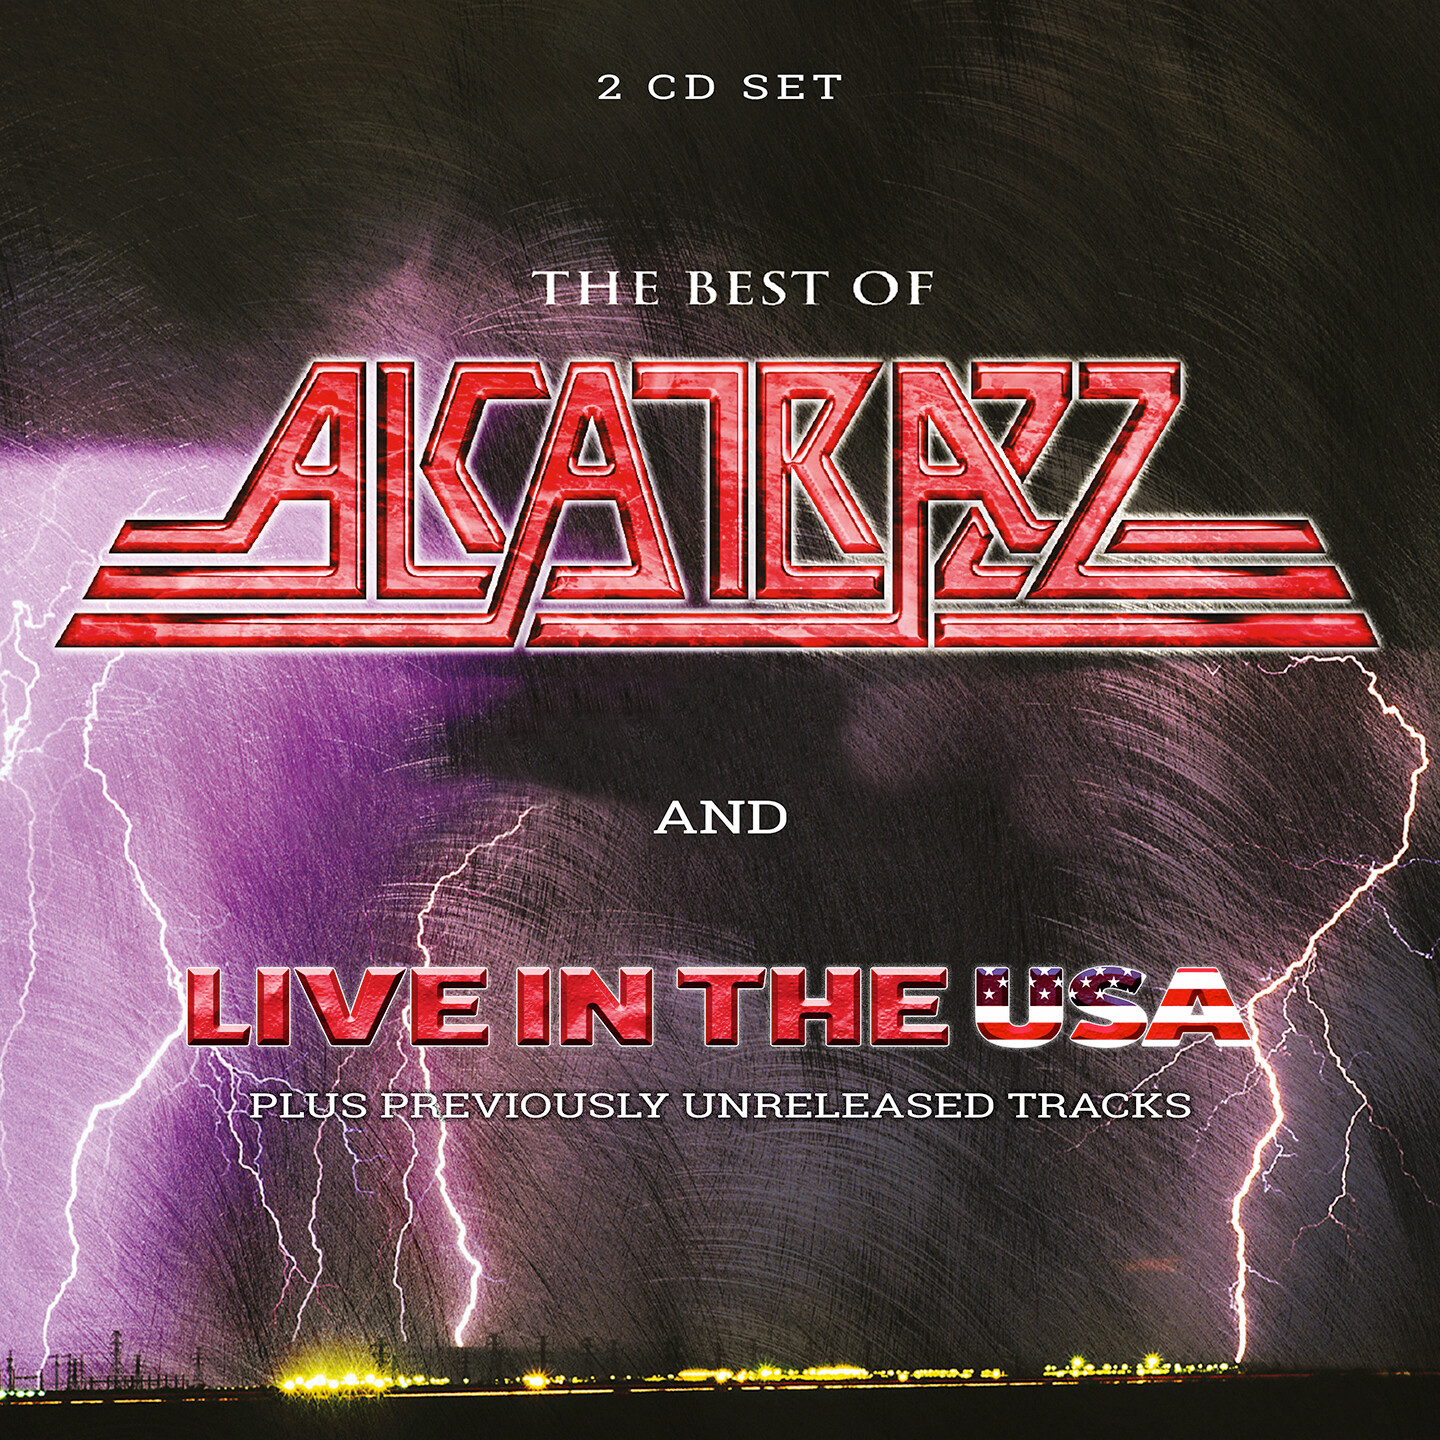 Alcatrazz - The Best Of Alcatrazz/Live In The USA